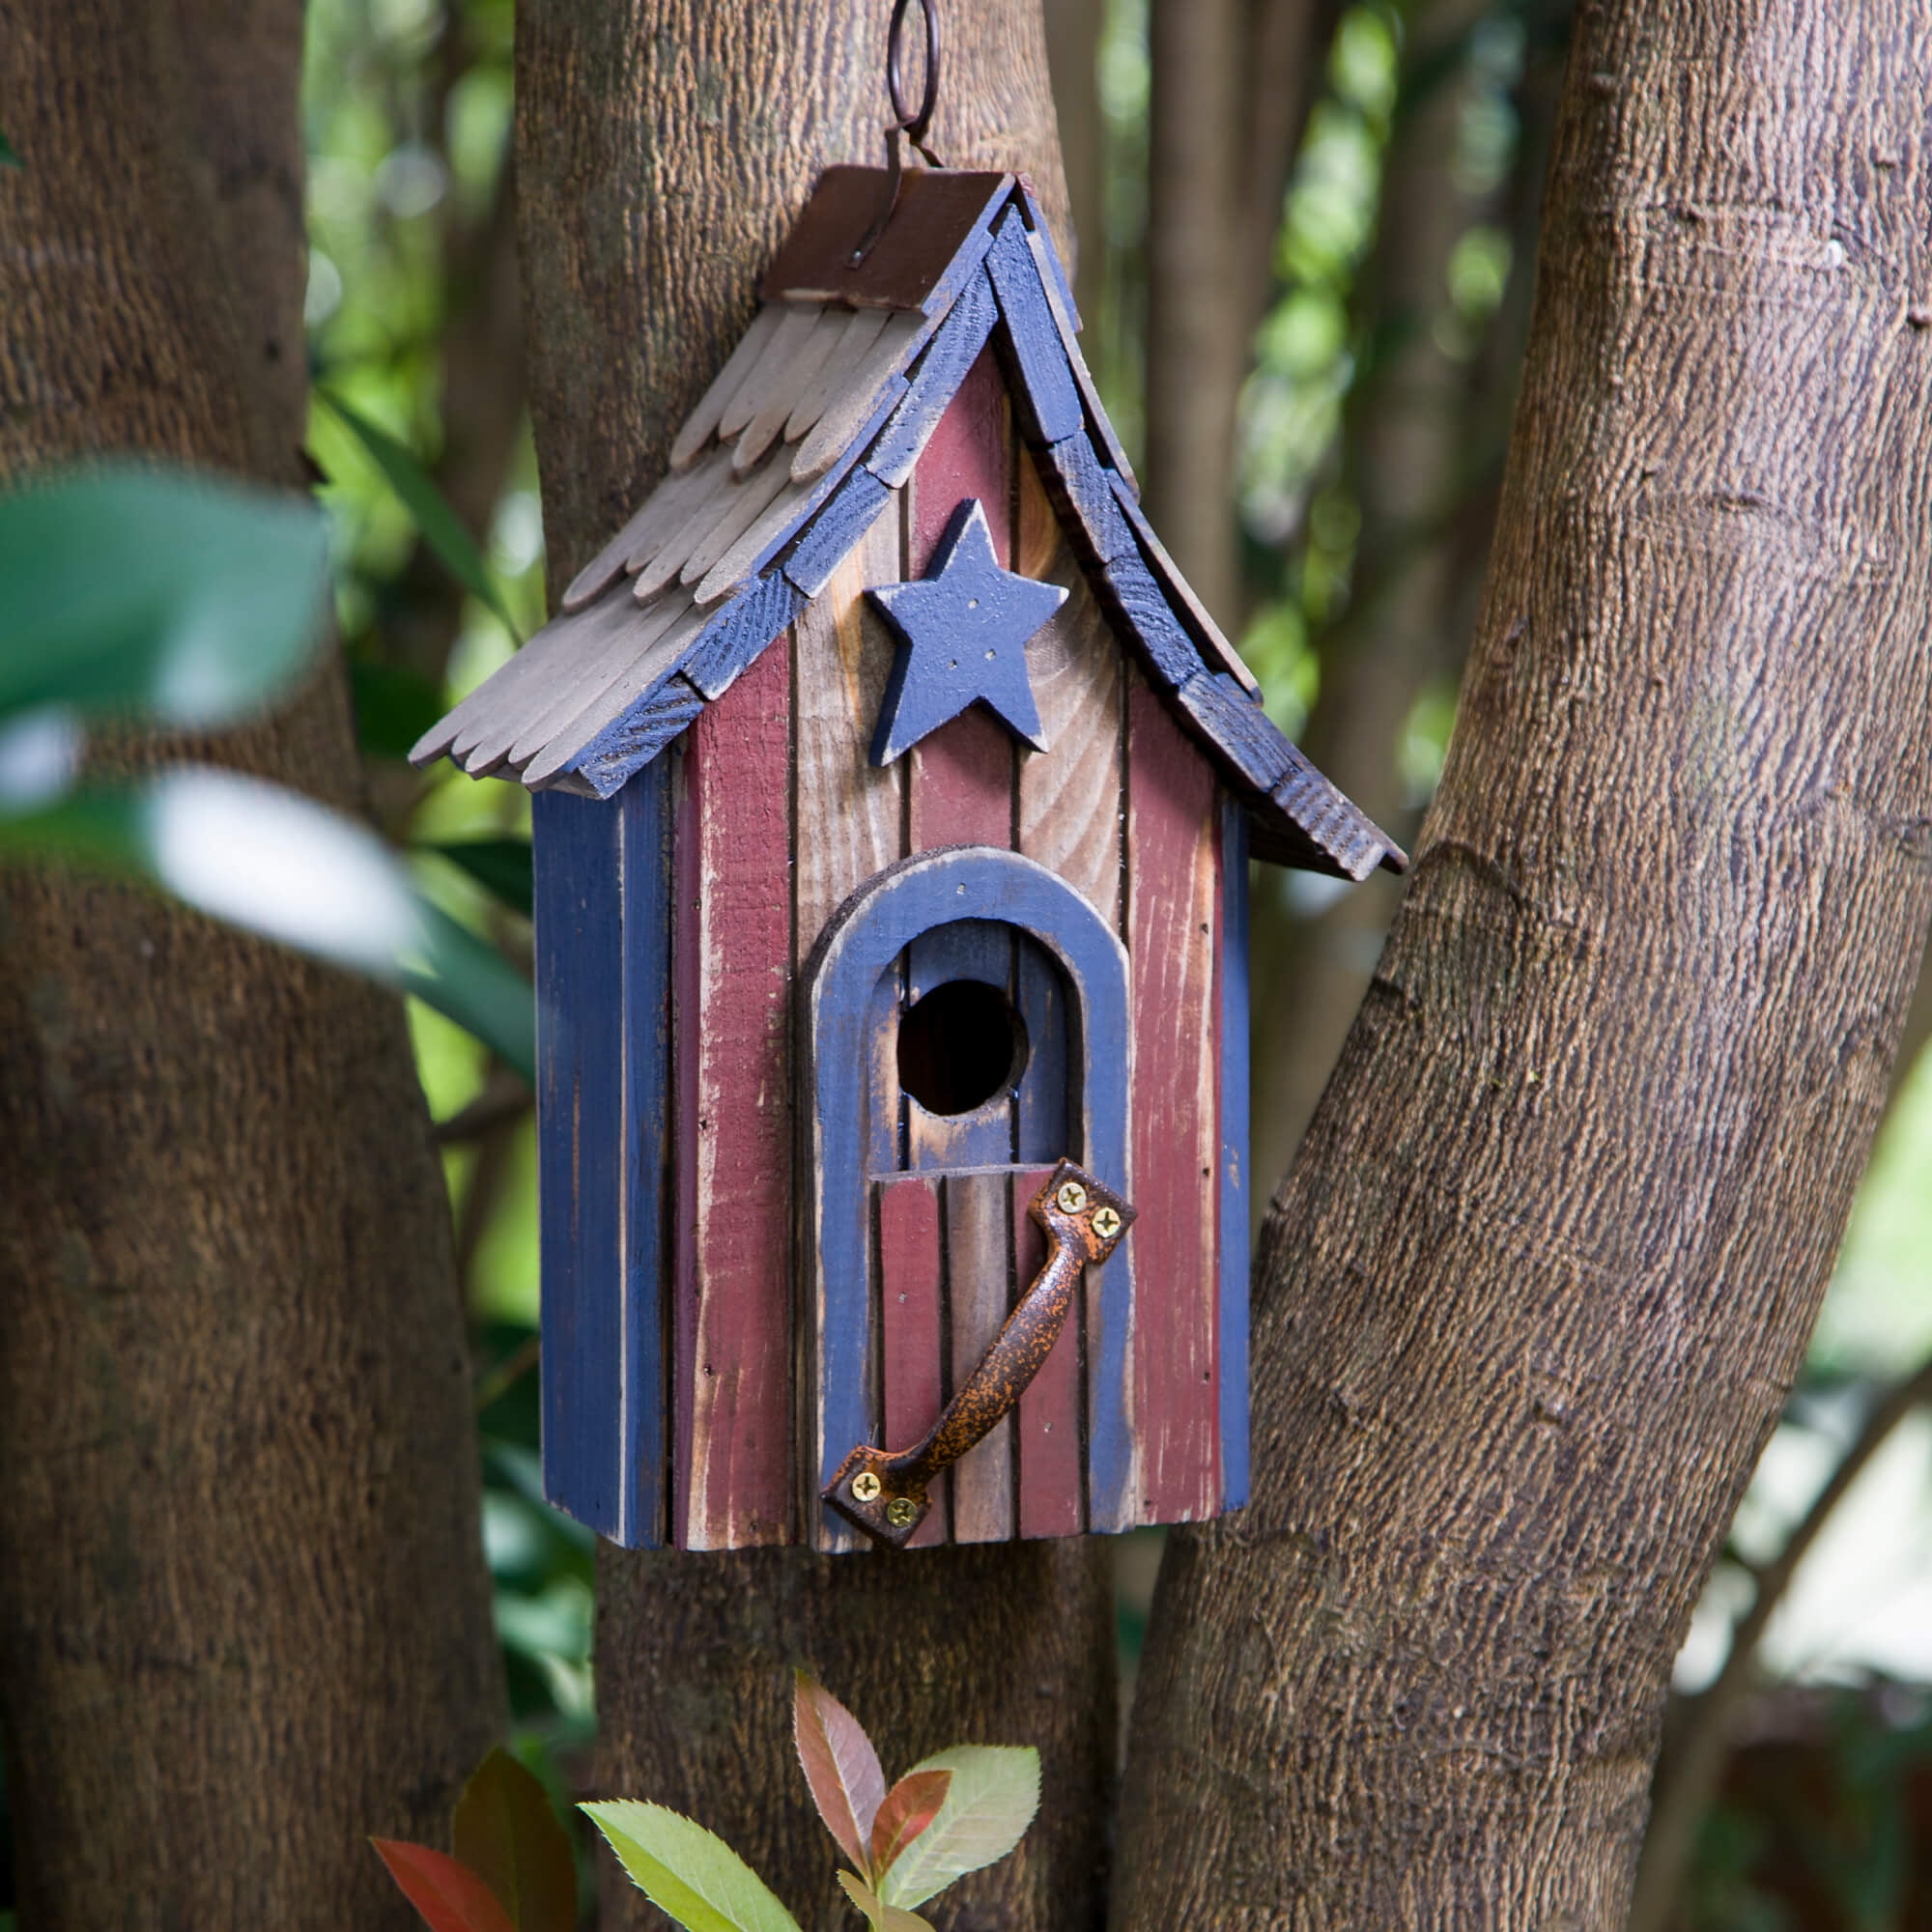 The Old Barn Bird House Solid Cedar Wood Unique Handmade in USA 